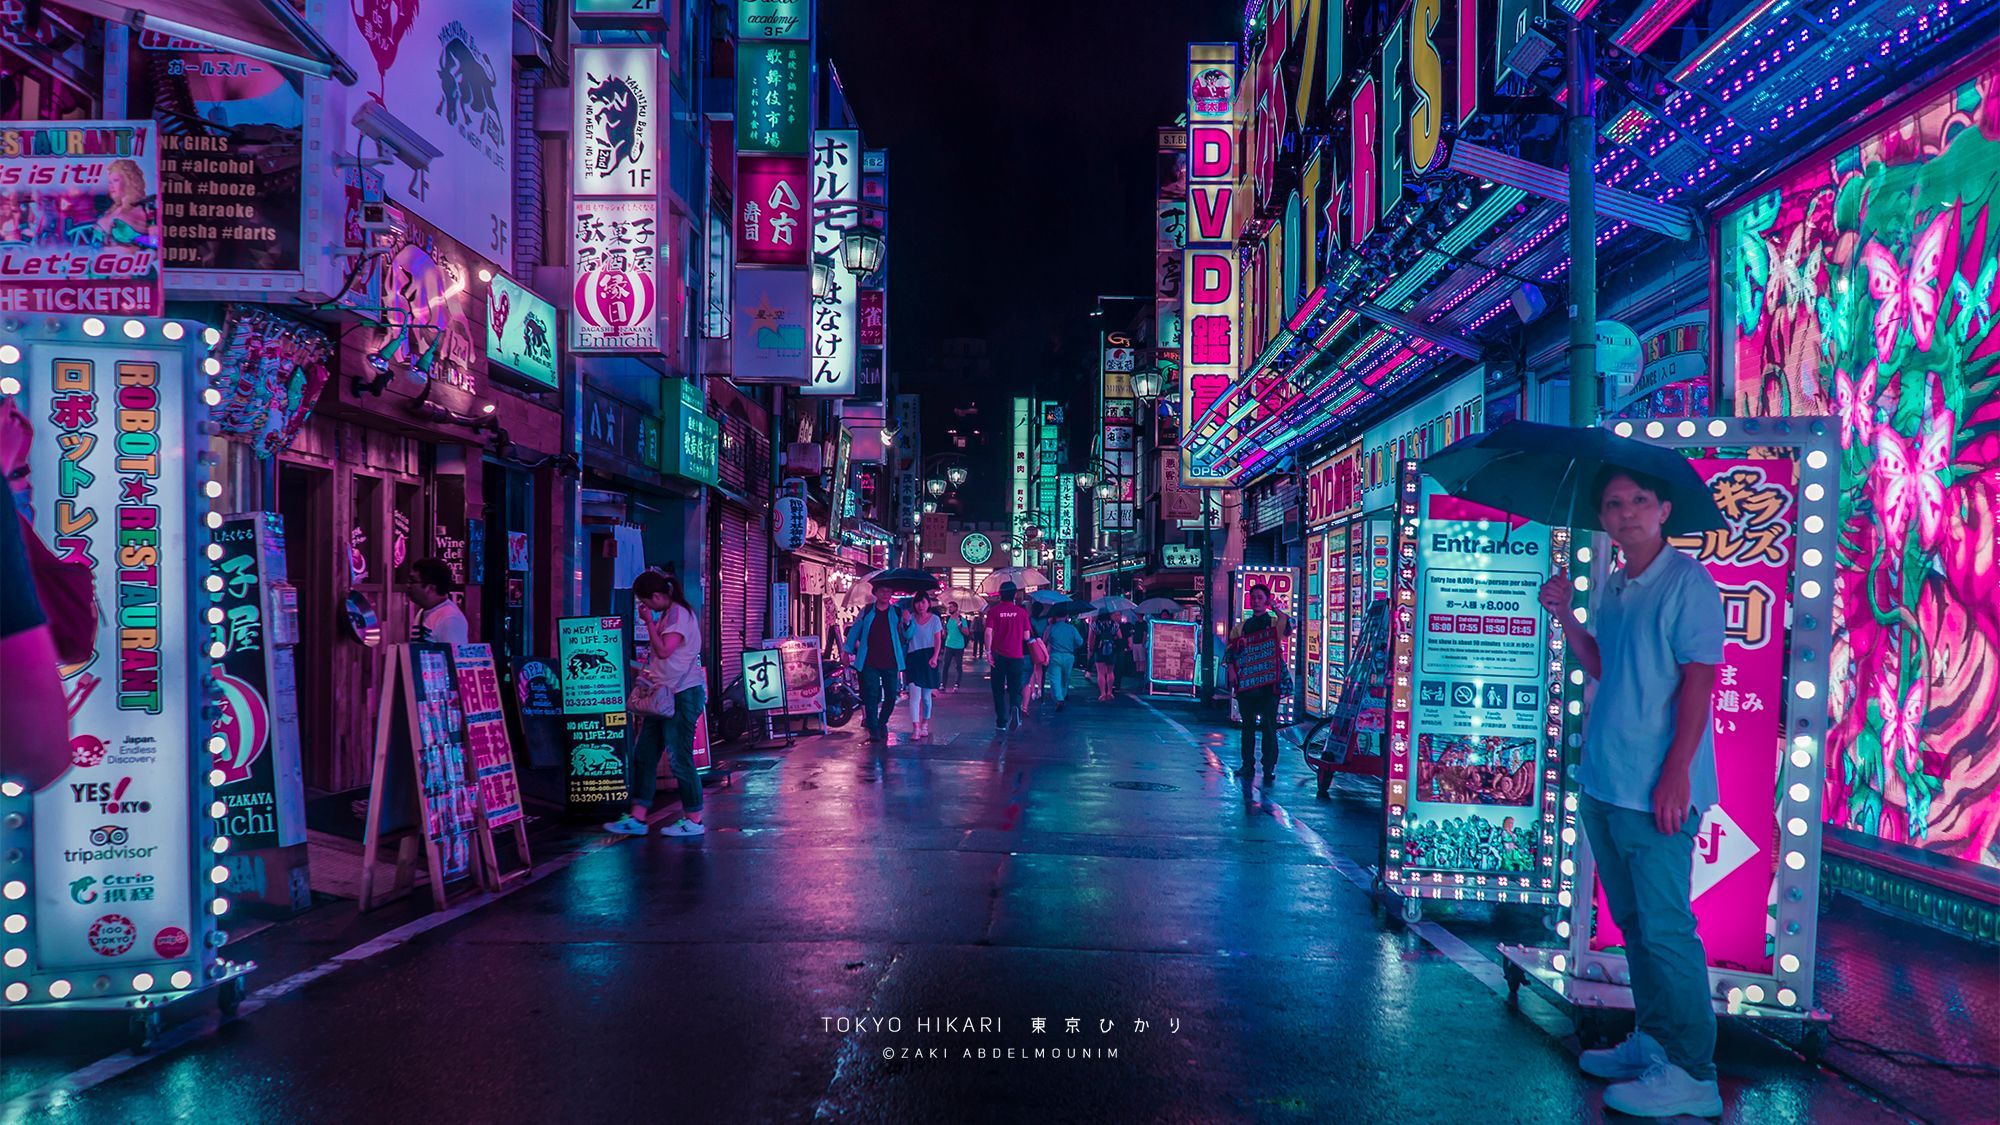 Tokyo Hikari - 東京 ひかり. Tokyo photography, Neon photography, Tokyo night